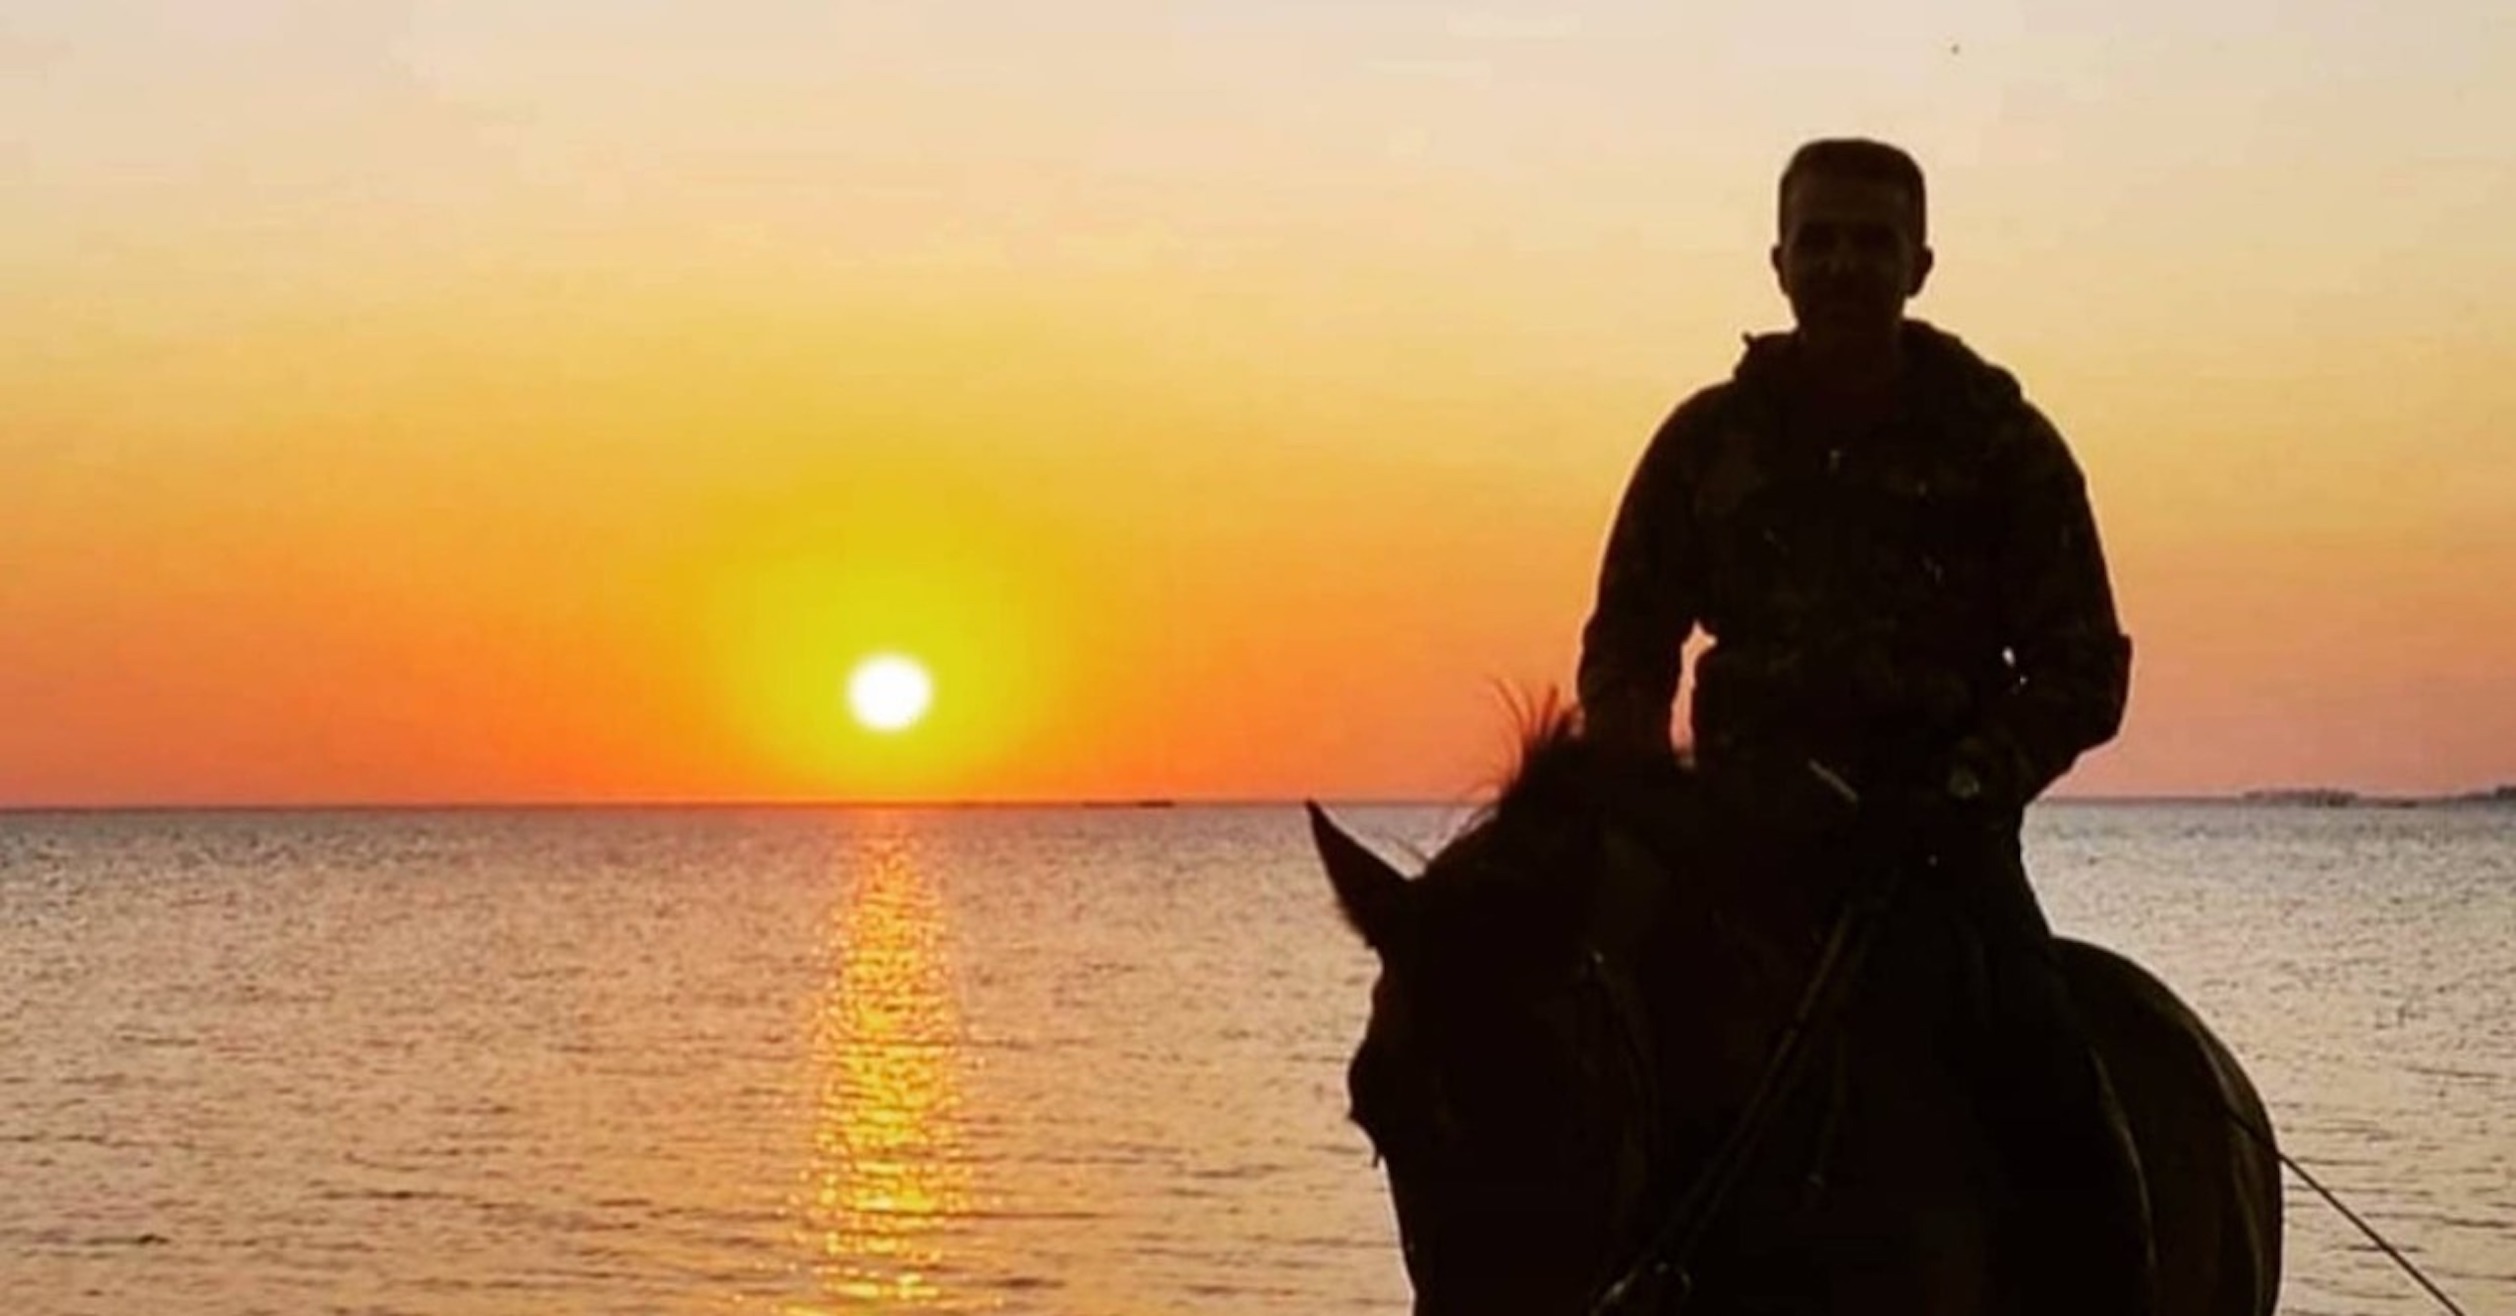 David-Equestrian-Sunset-2516x1316-8857.jpeg